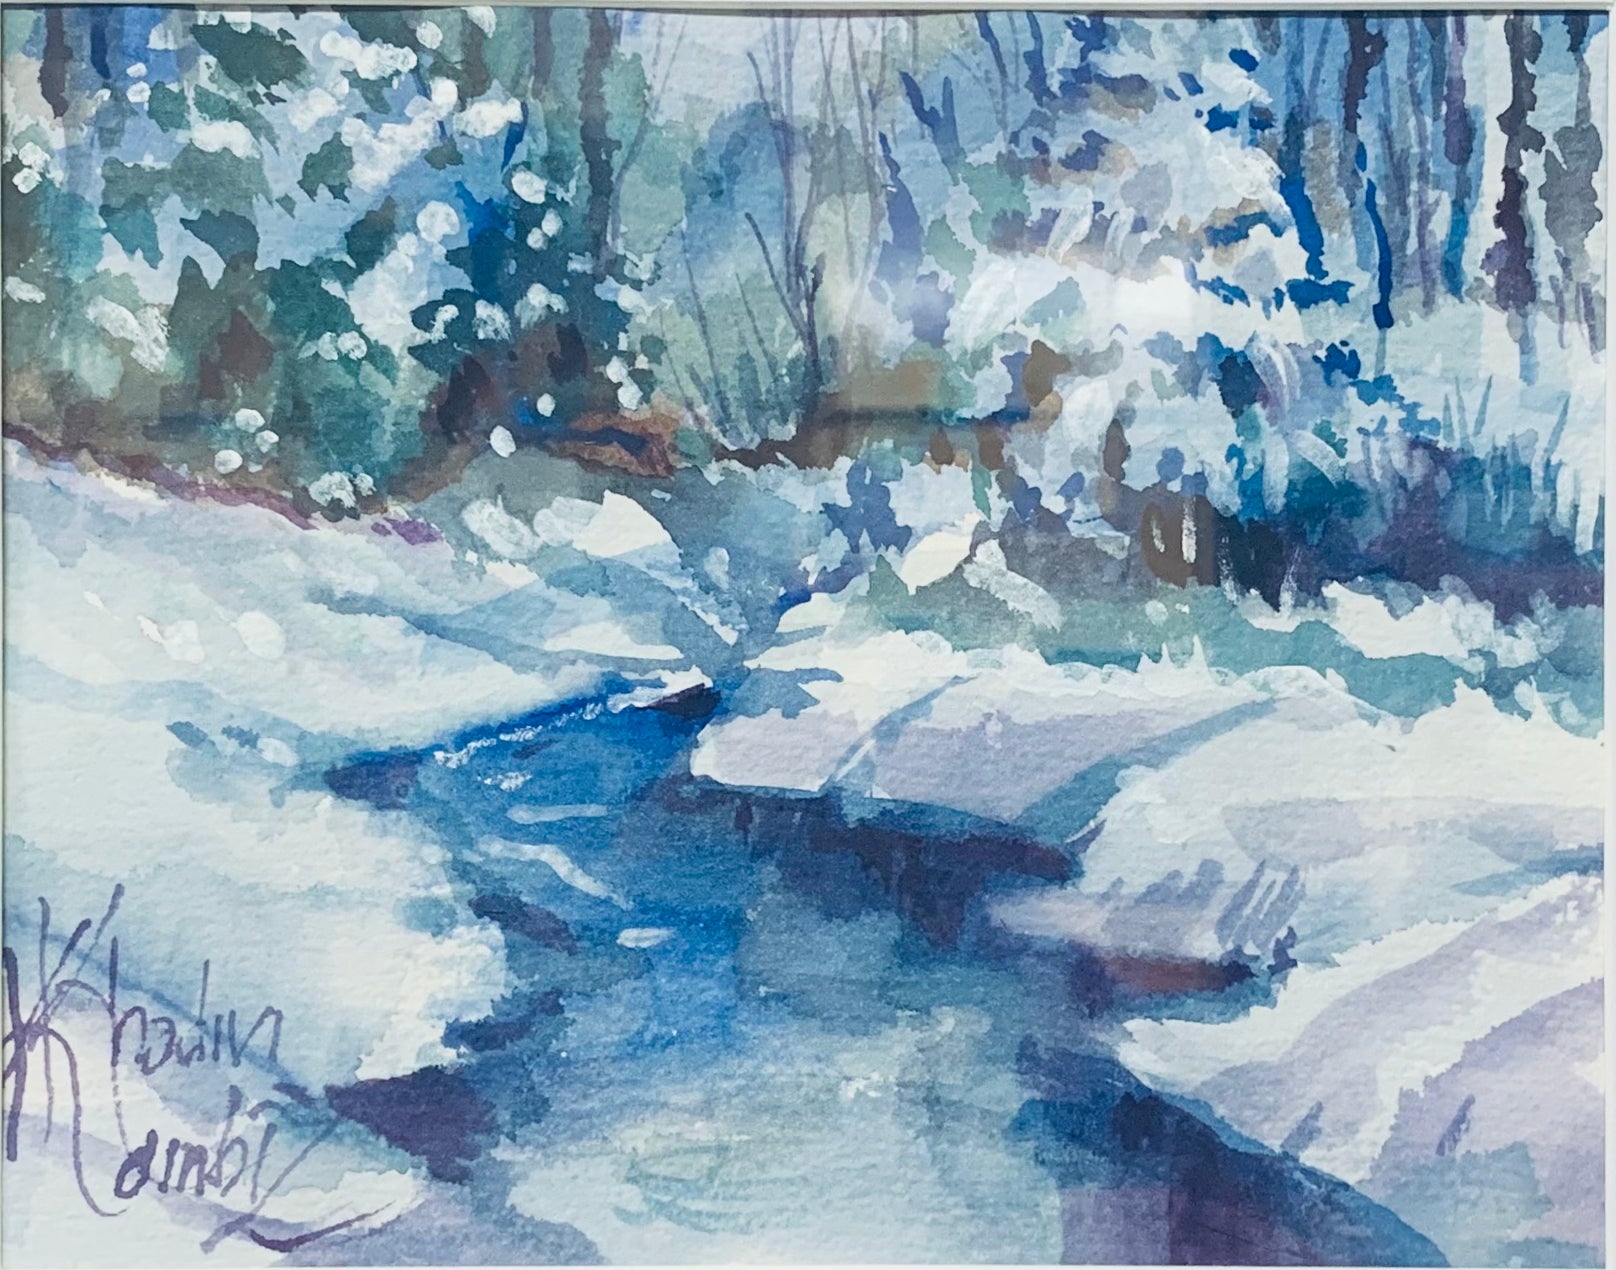 By The Creek in Winter, Colorado